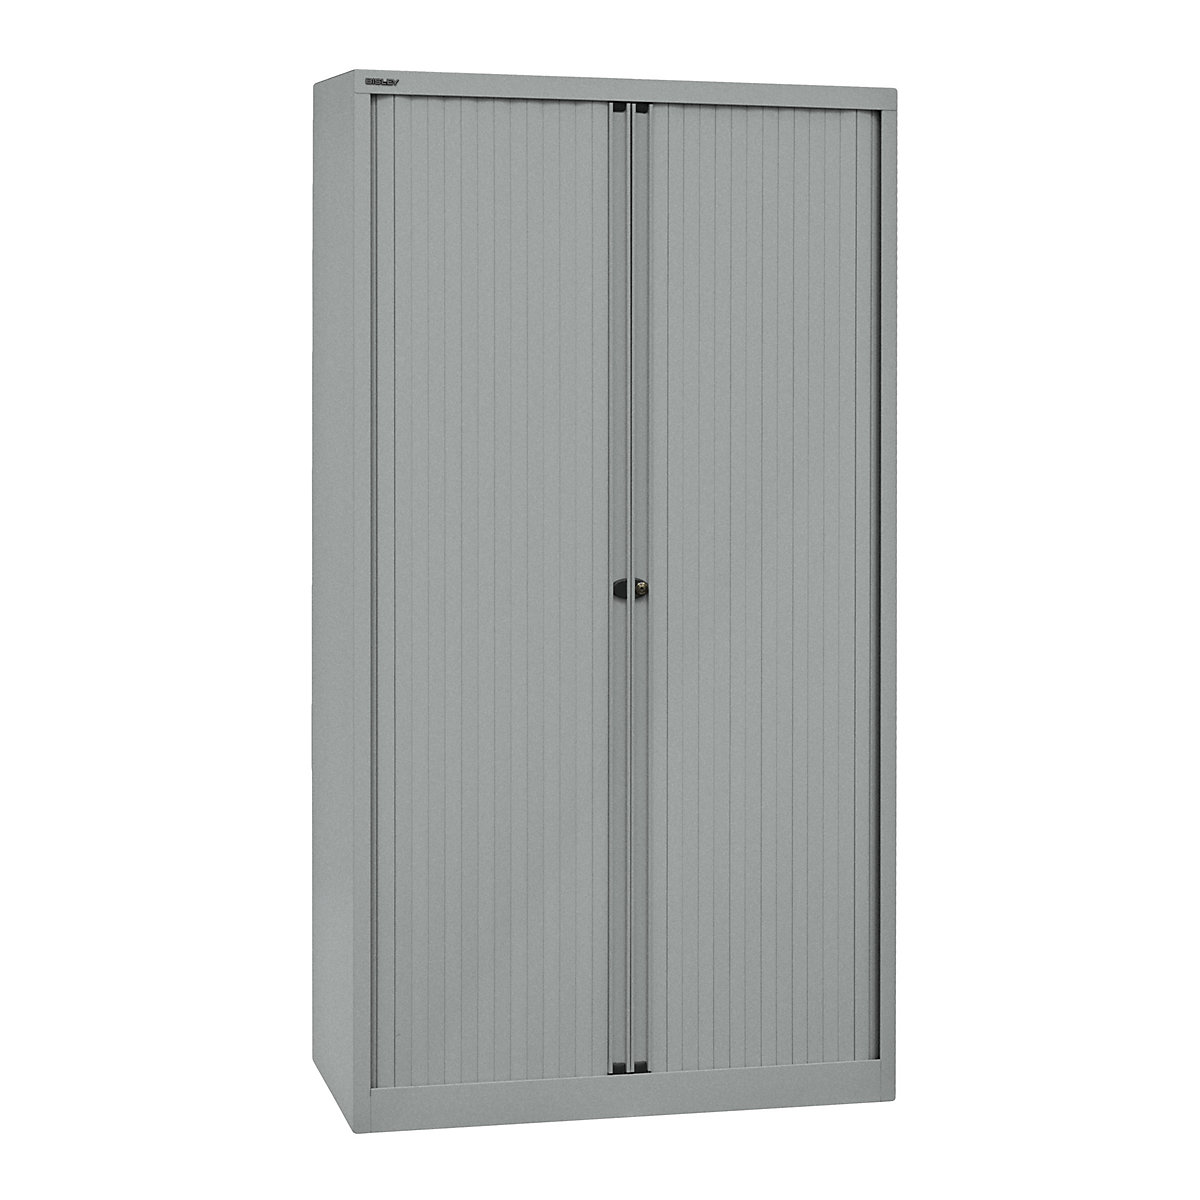 EURO roller shutter cupboard – BISLEY, width 1000 mm, 4 shelves, silver-5